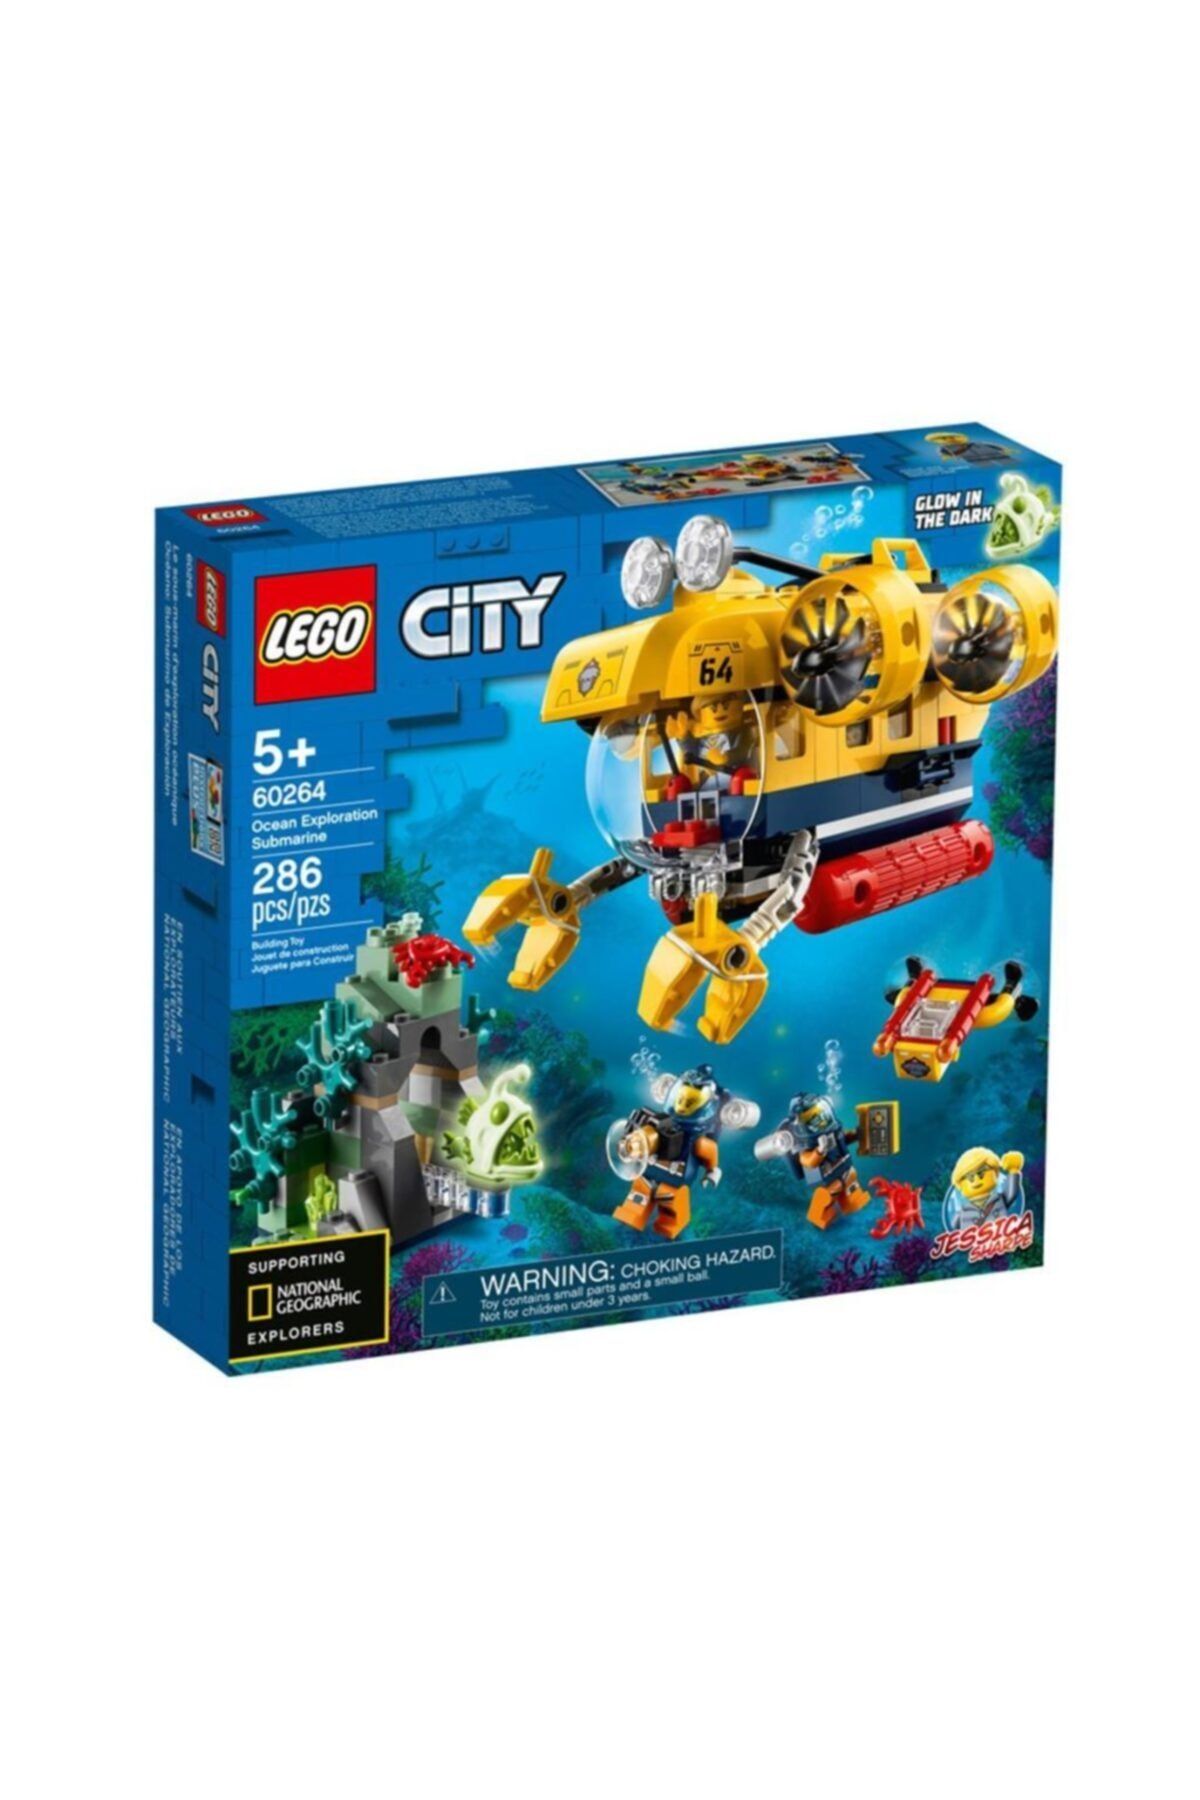 LEGO لگو زیردریایی اکتشاف اقیانوس Lsc60264 / 286 عدد / شهر / + 5 سال /